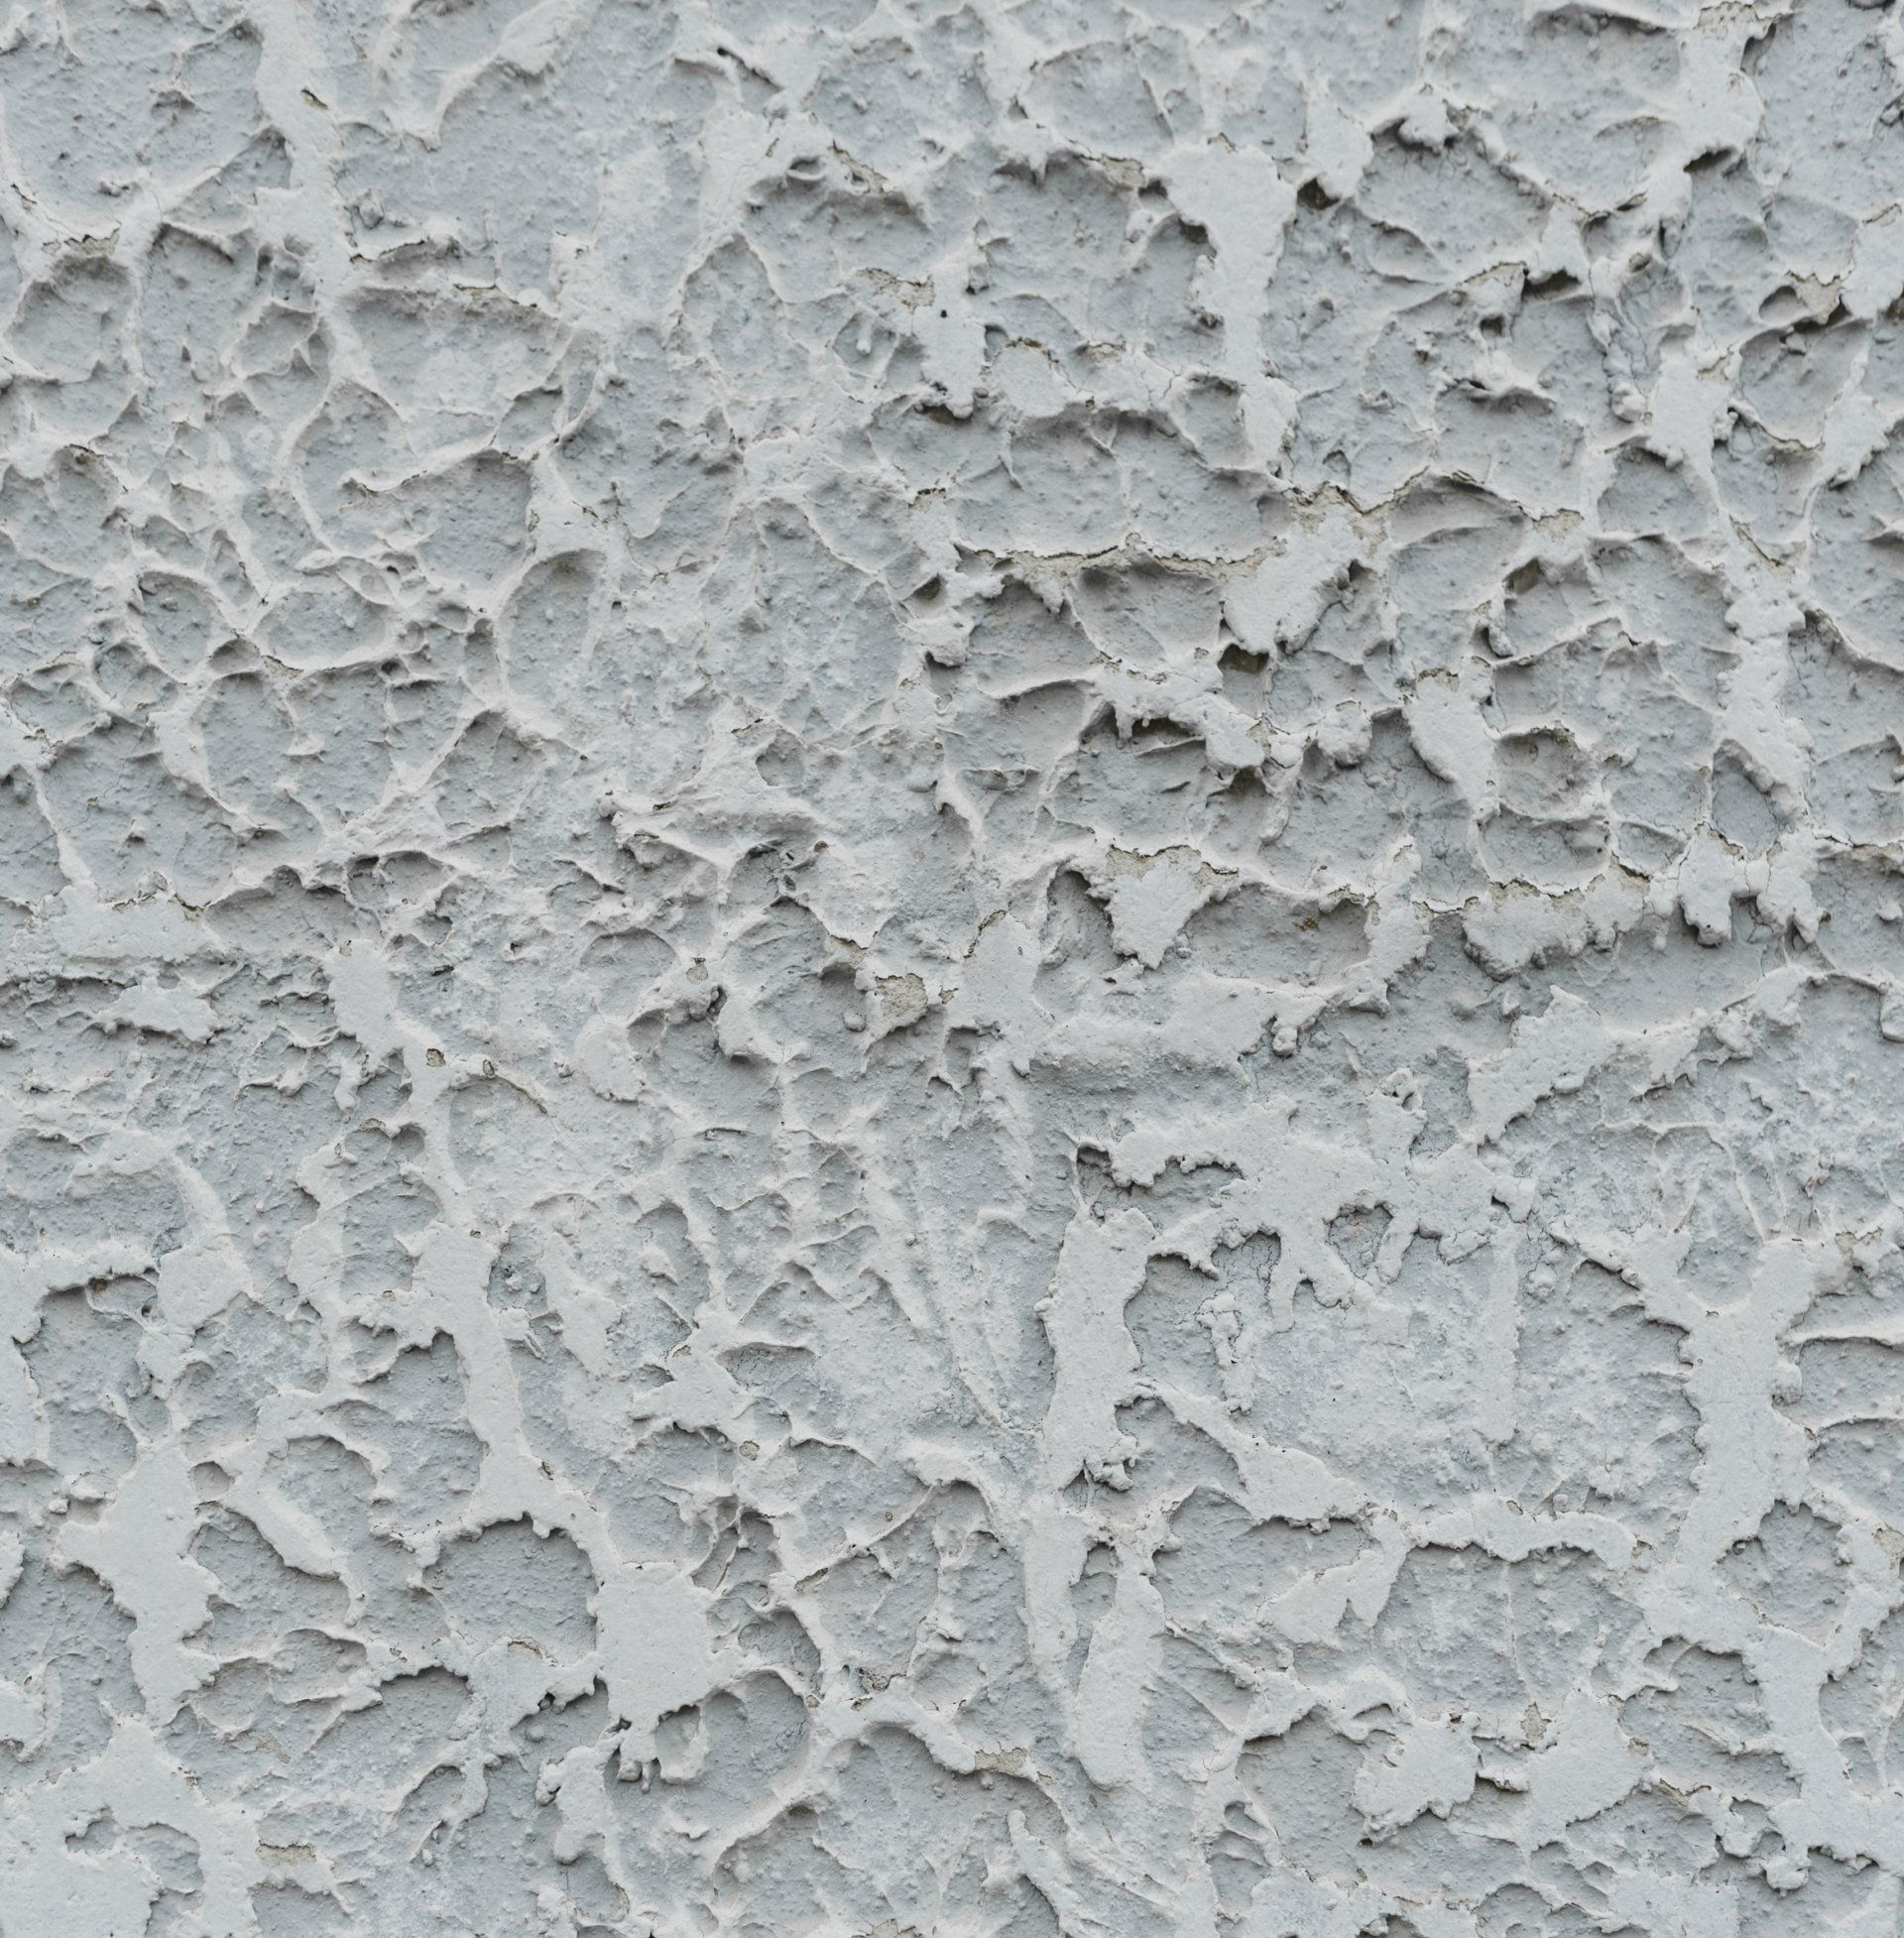 Cracked gray stucco wall